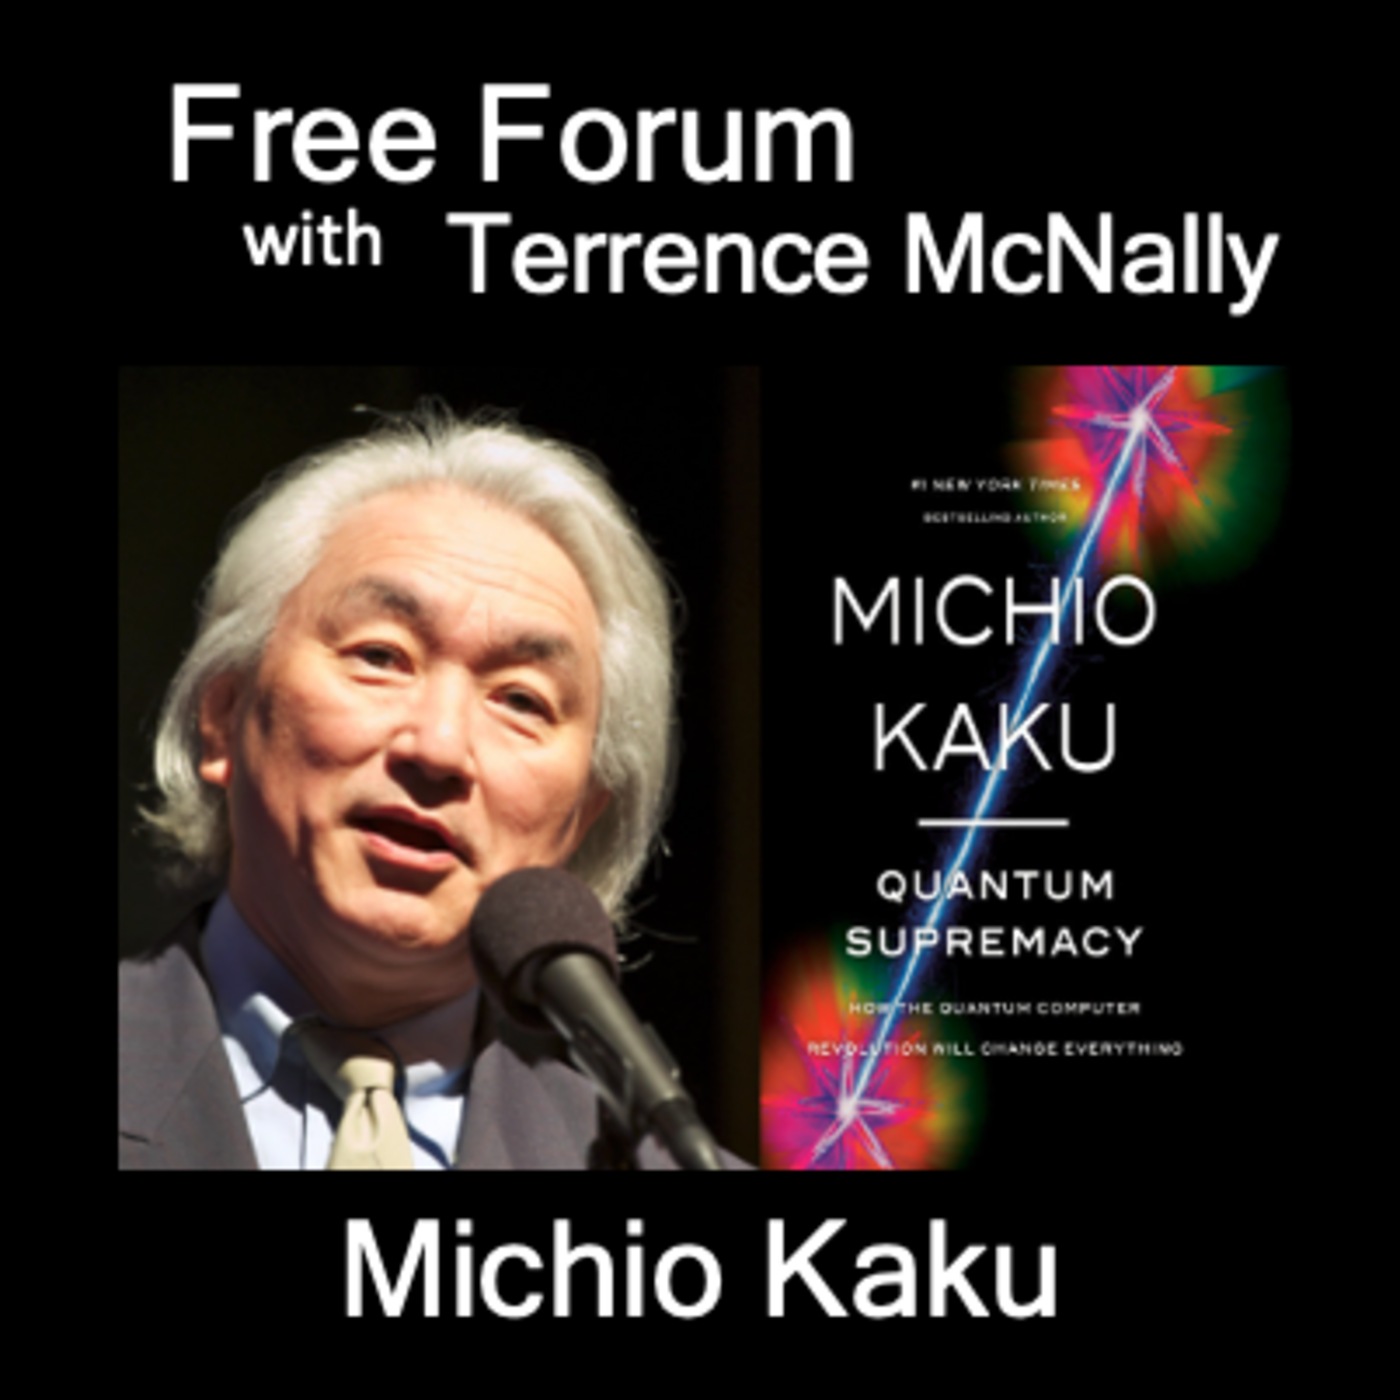 Episode 621: MICHIO KAKU-QUANTUM SUPREMACY: How the Quantum Computer Revolution Will Change Everything